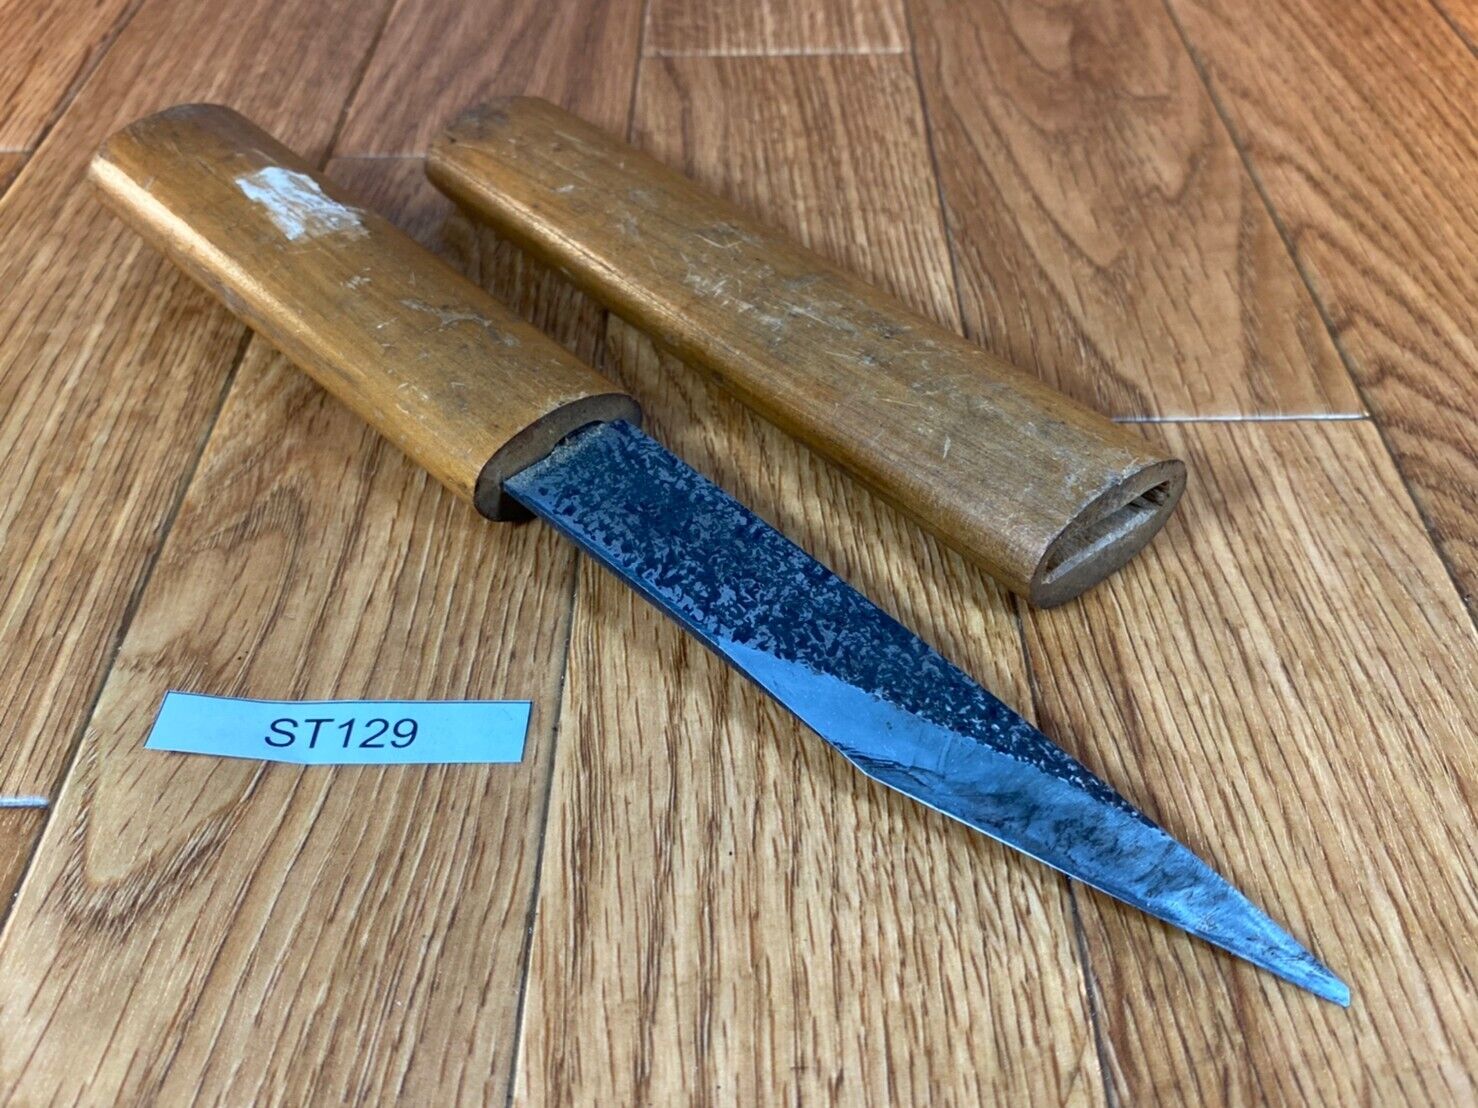 Rare Japanese Small Knife Kogatana Woodworking Handcraft Tool 120/233mm St129